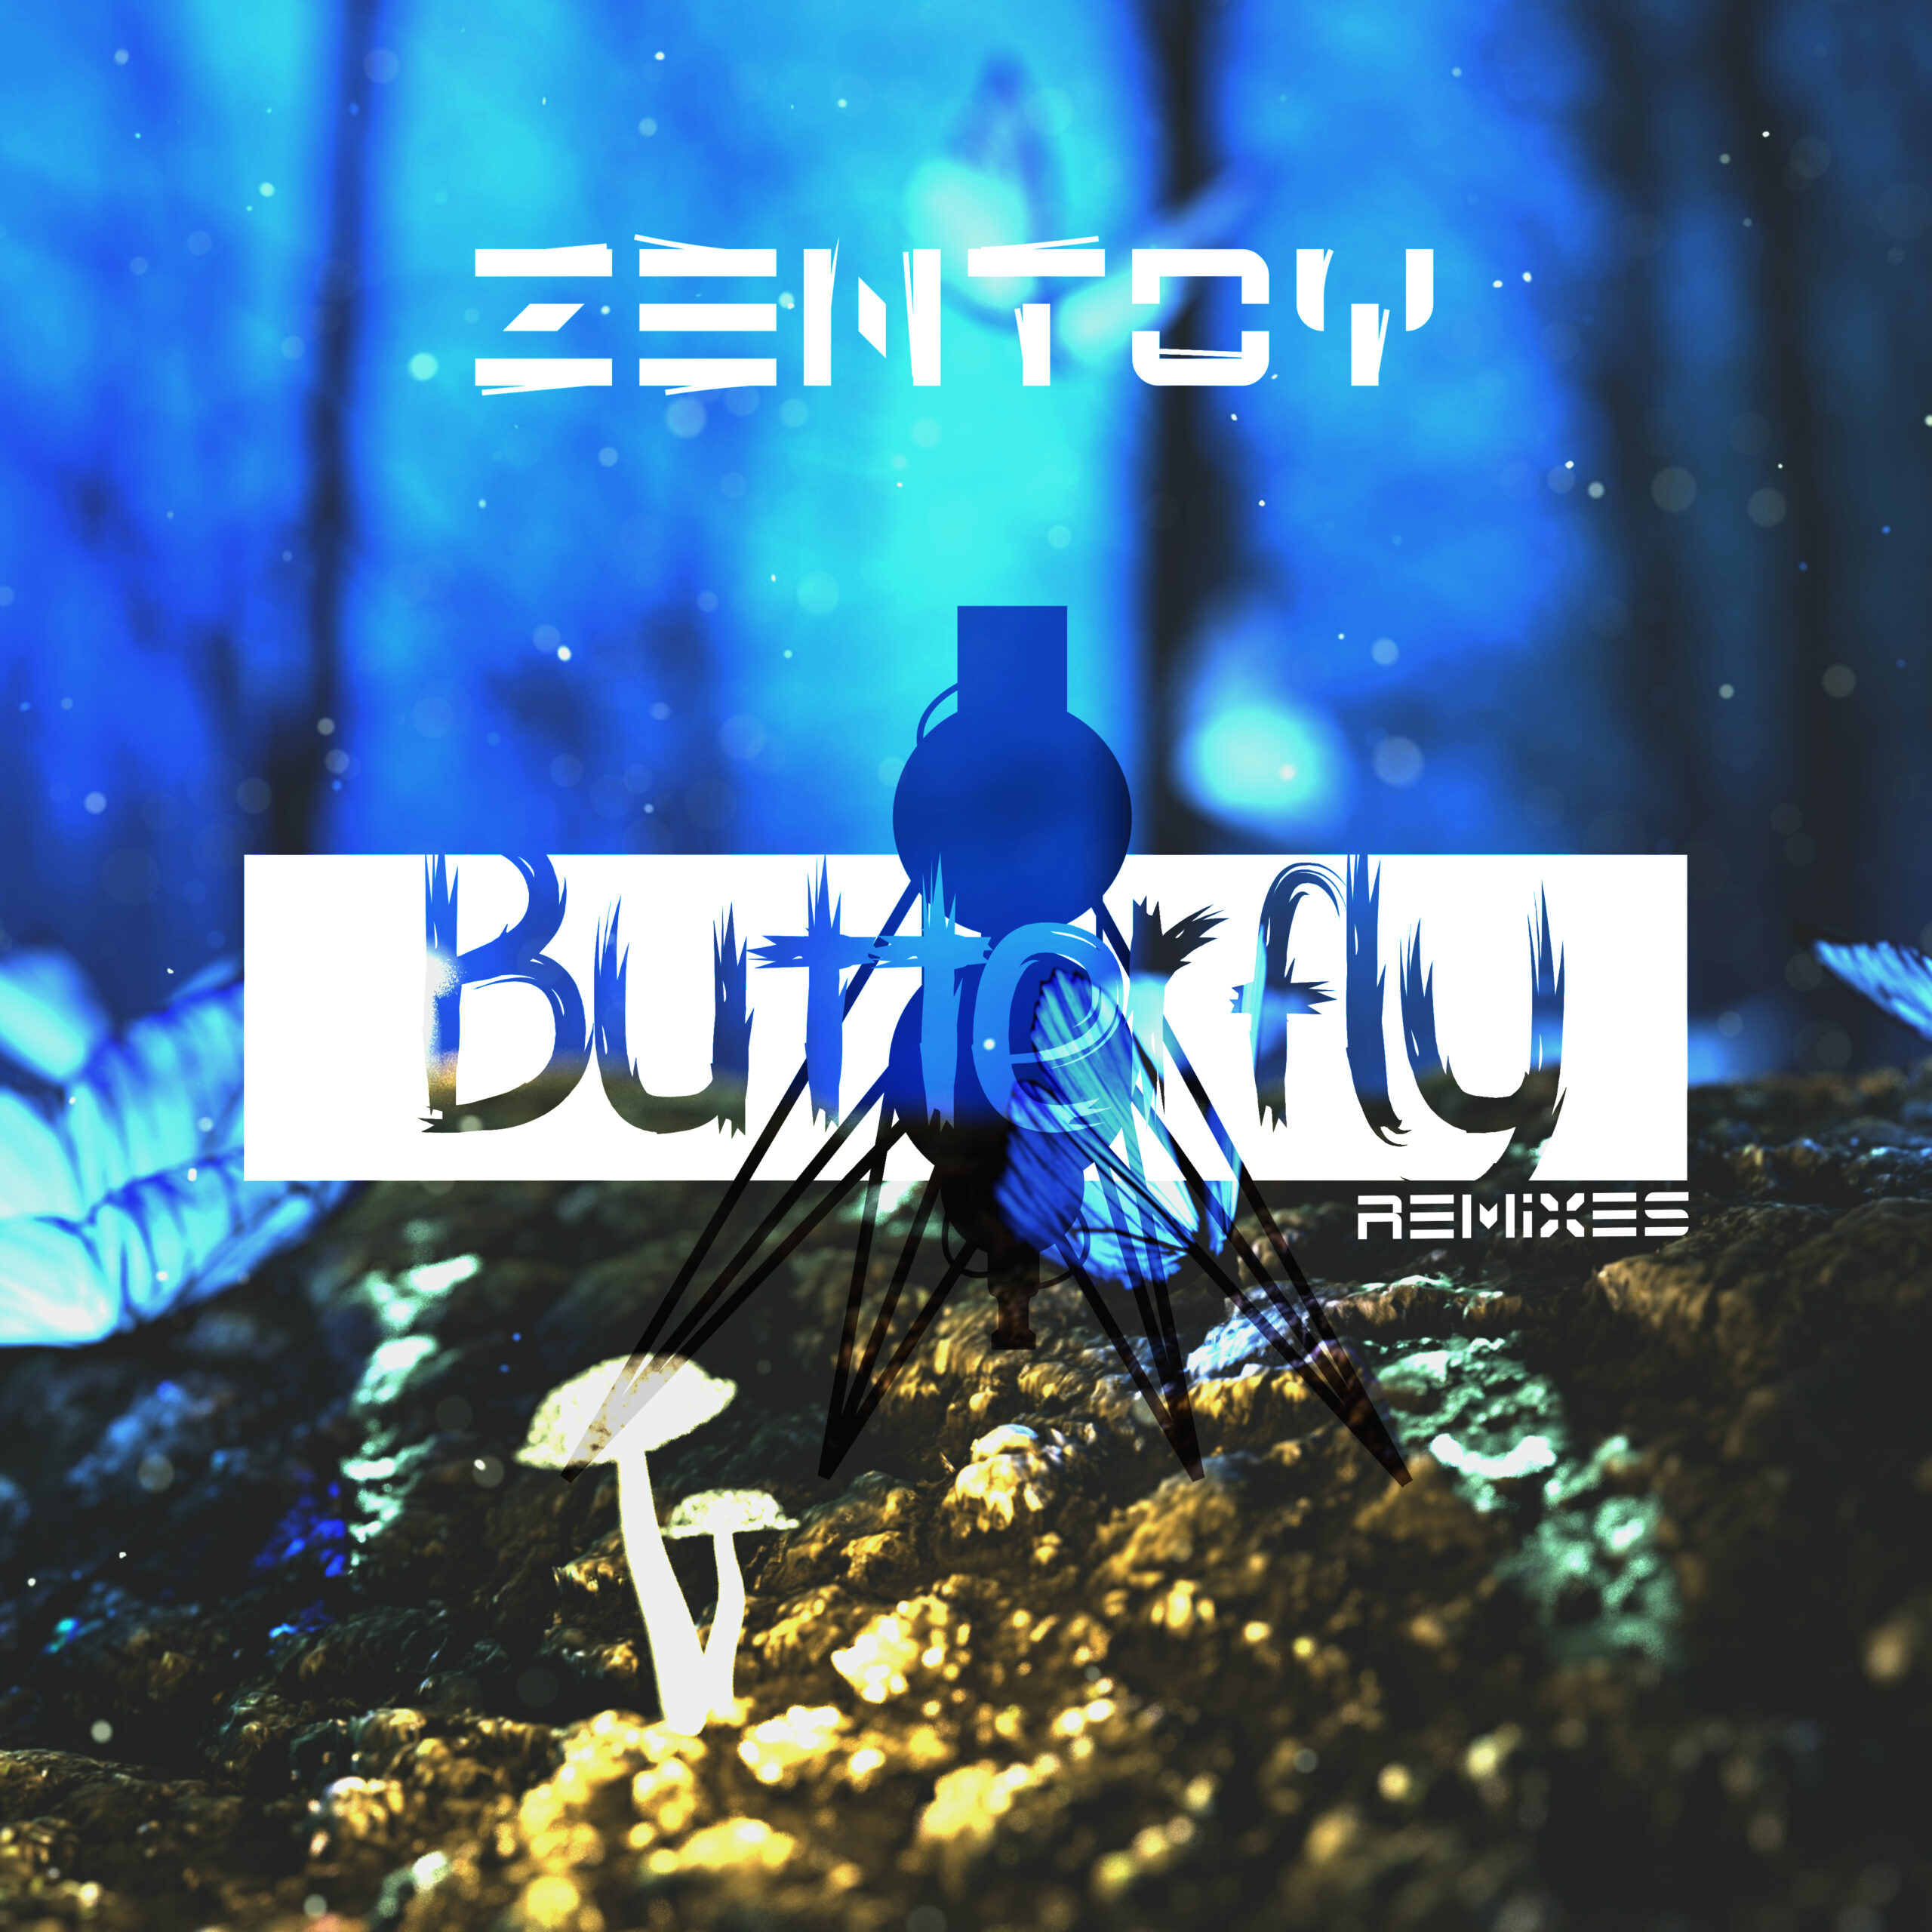 ZenToy - Butterfly (Remixes)